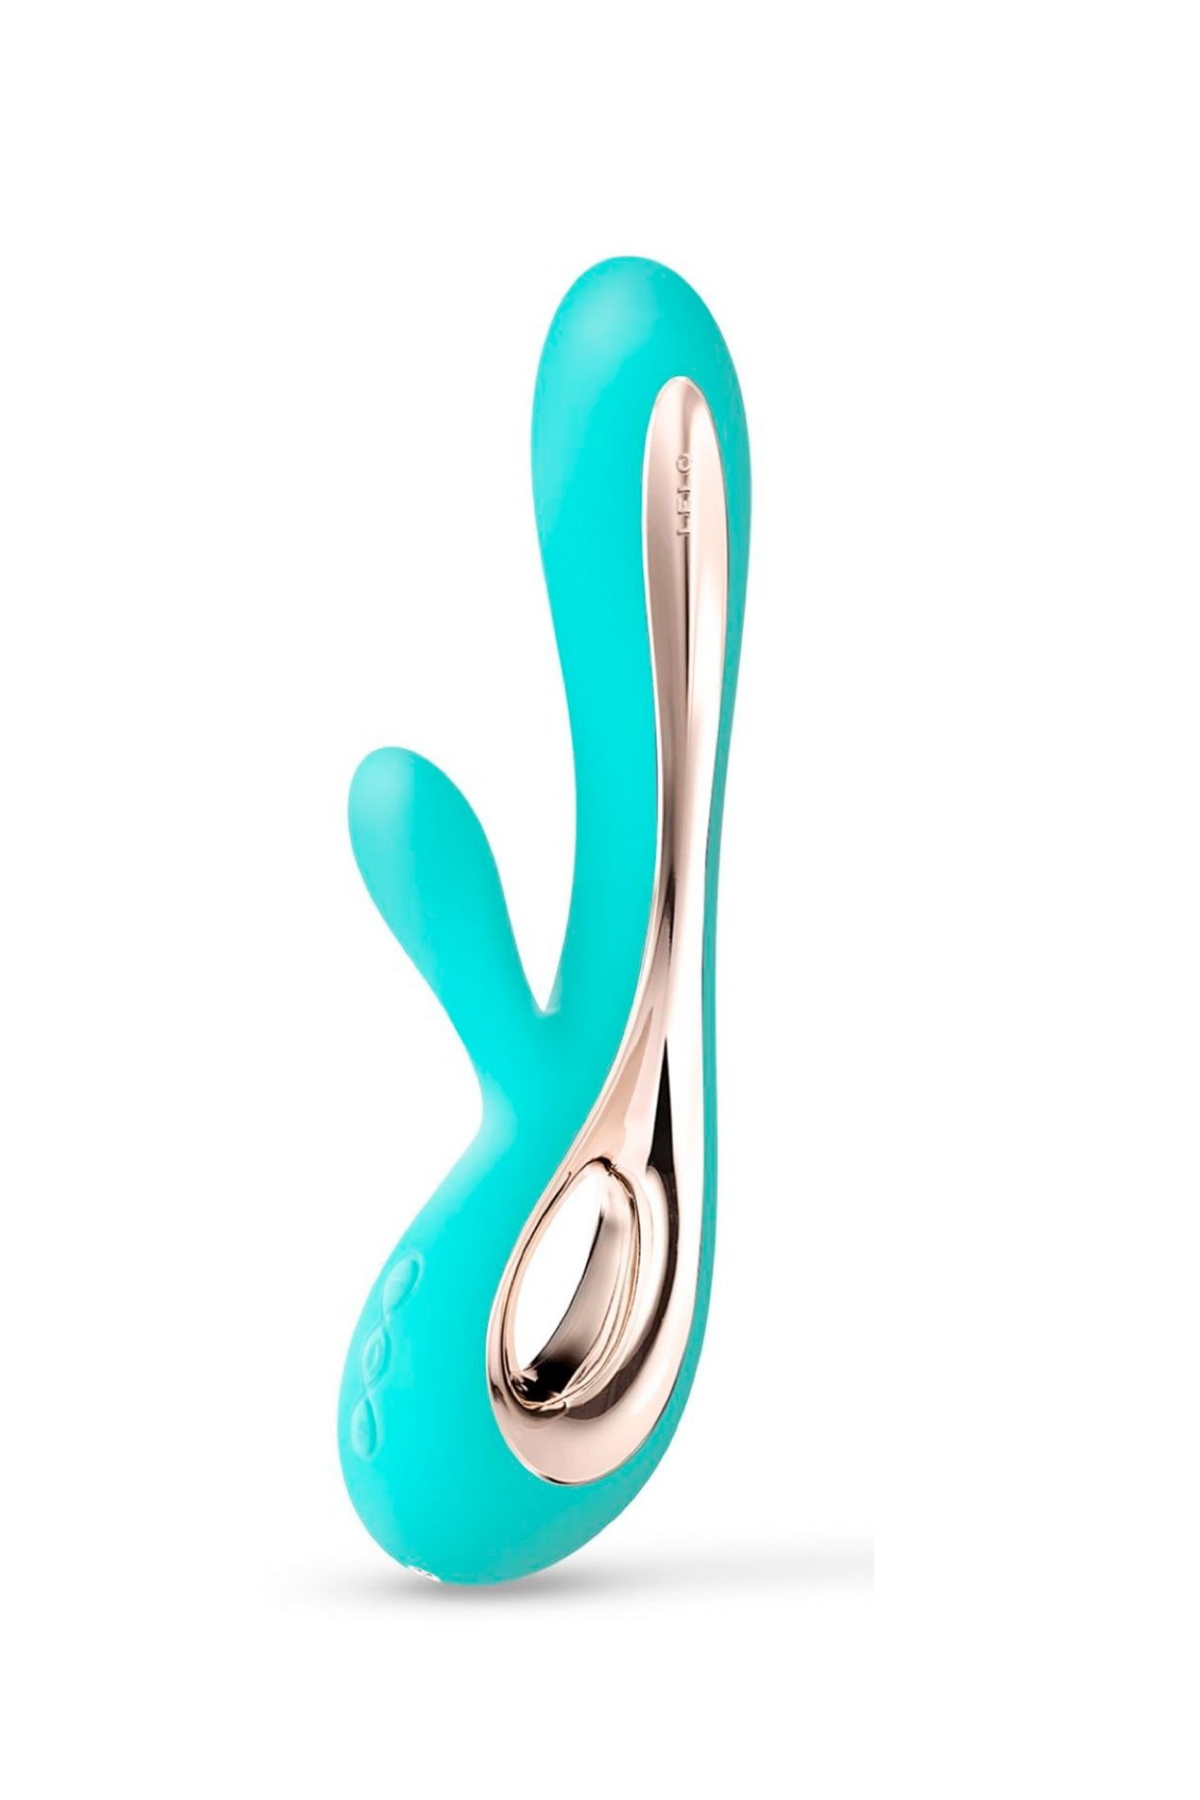 Teal Soraya 2 Rabbit Vibrator by Lelo | Matildas.co.za